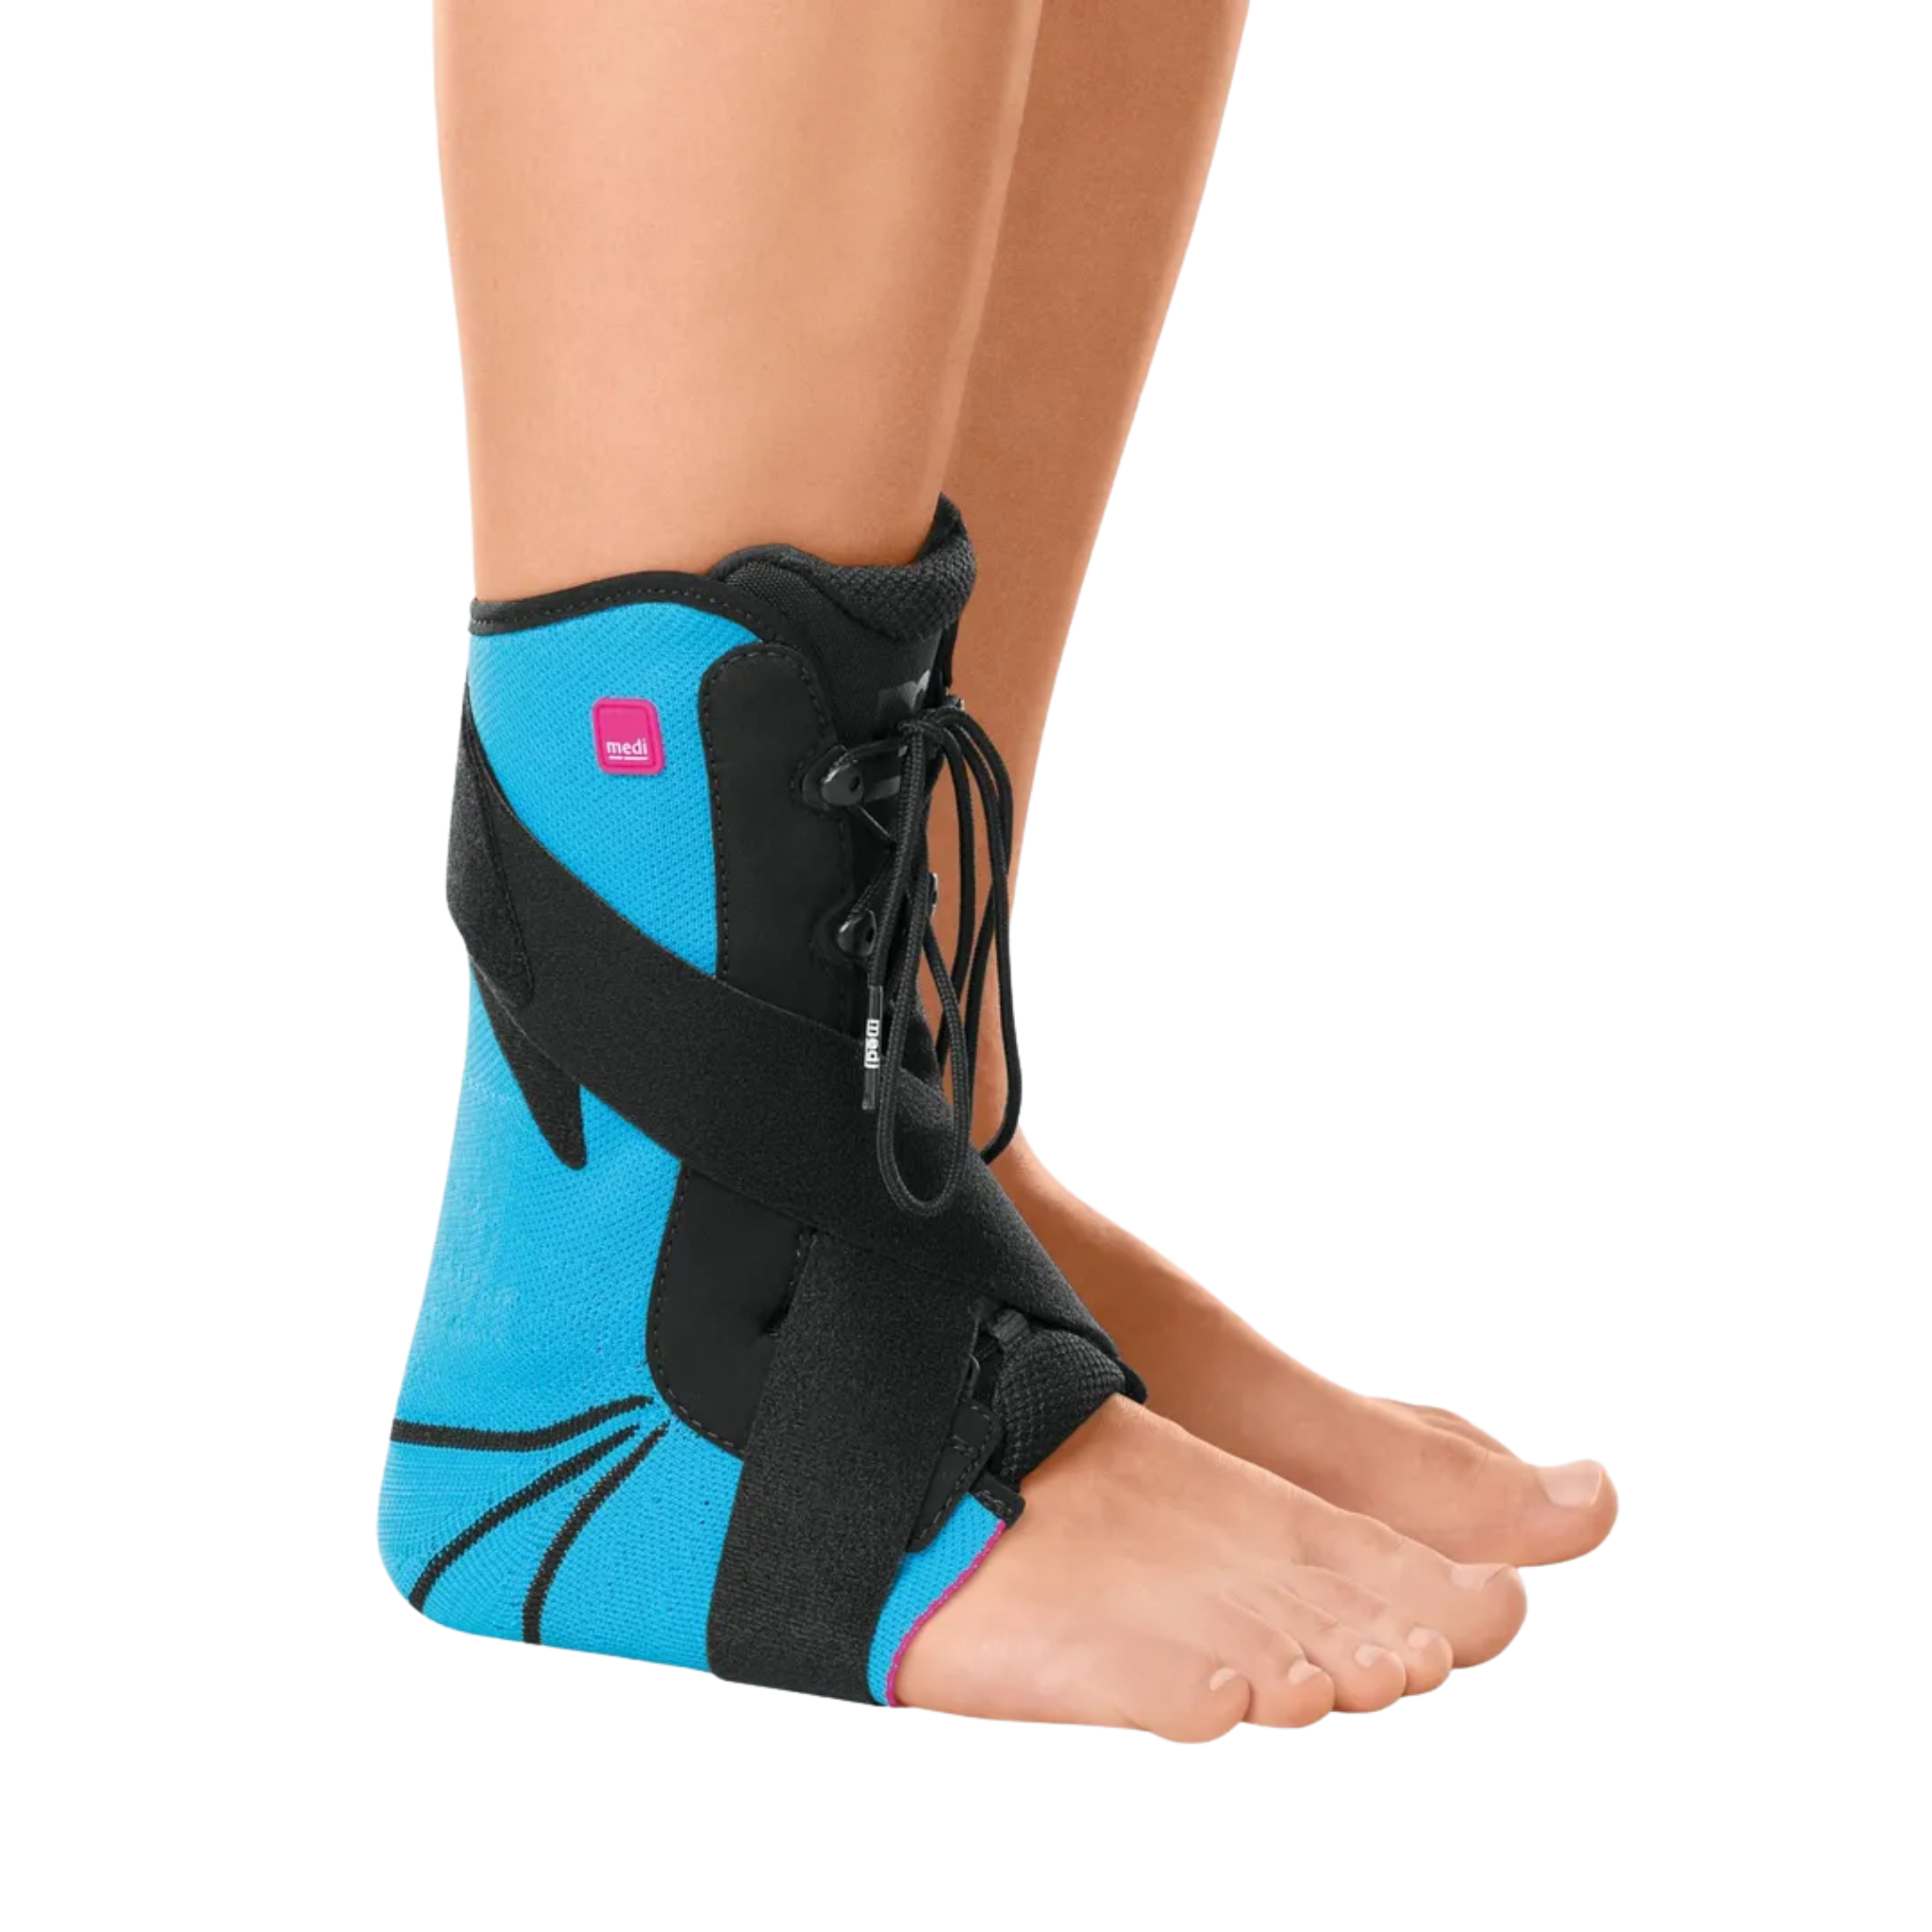 Ankle Orthosis | Levamed stabili-tri | medi